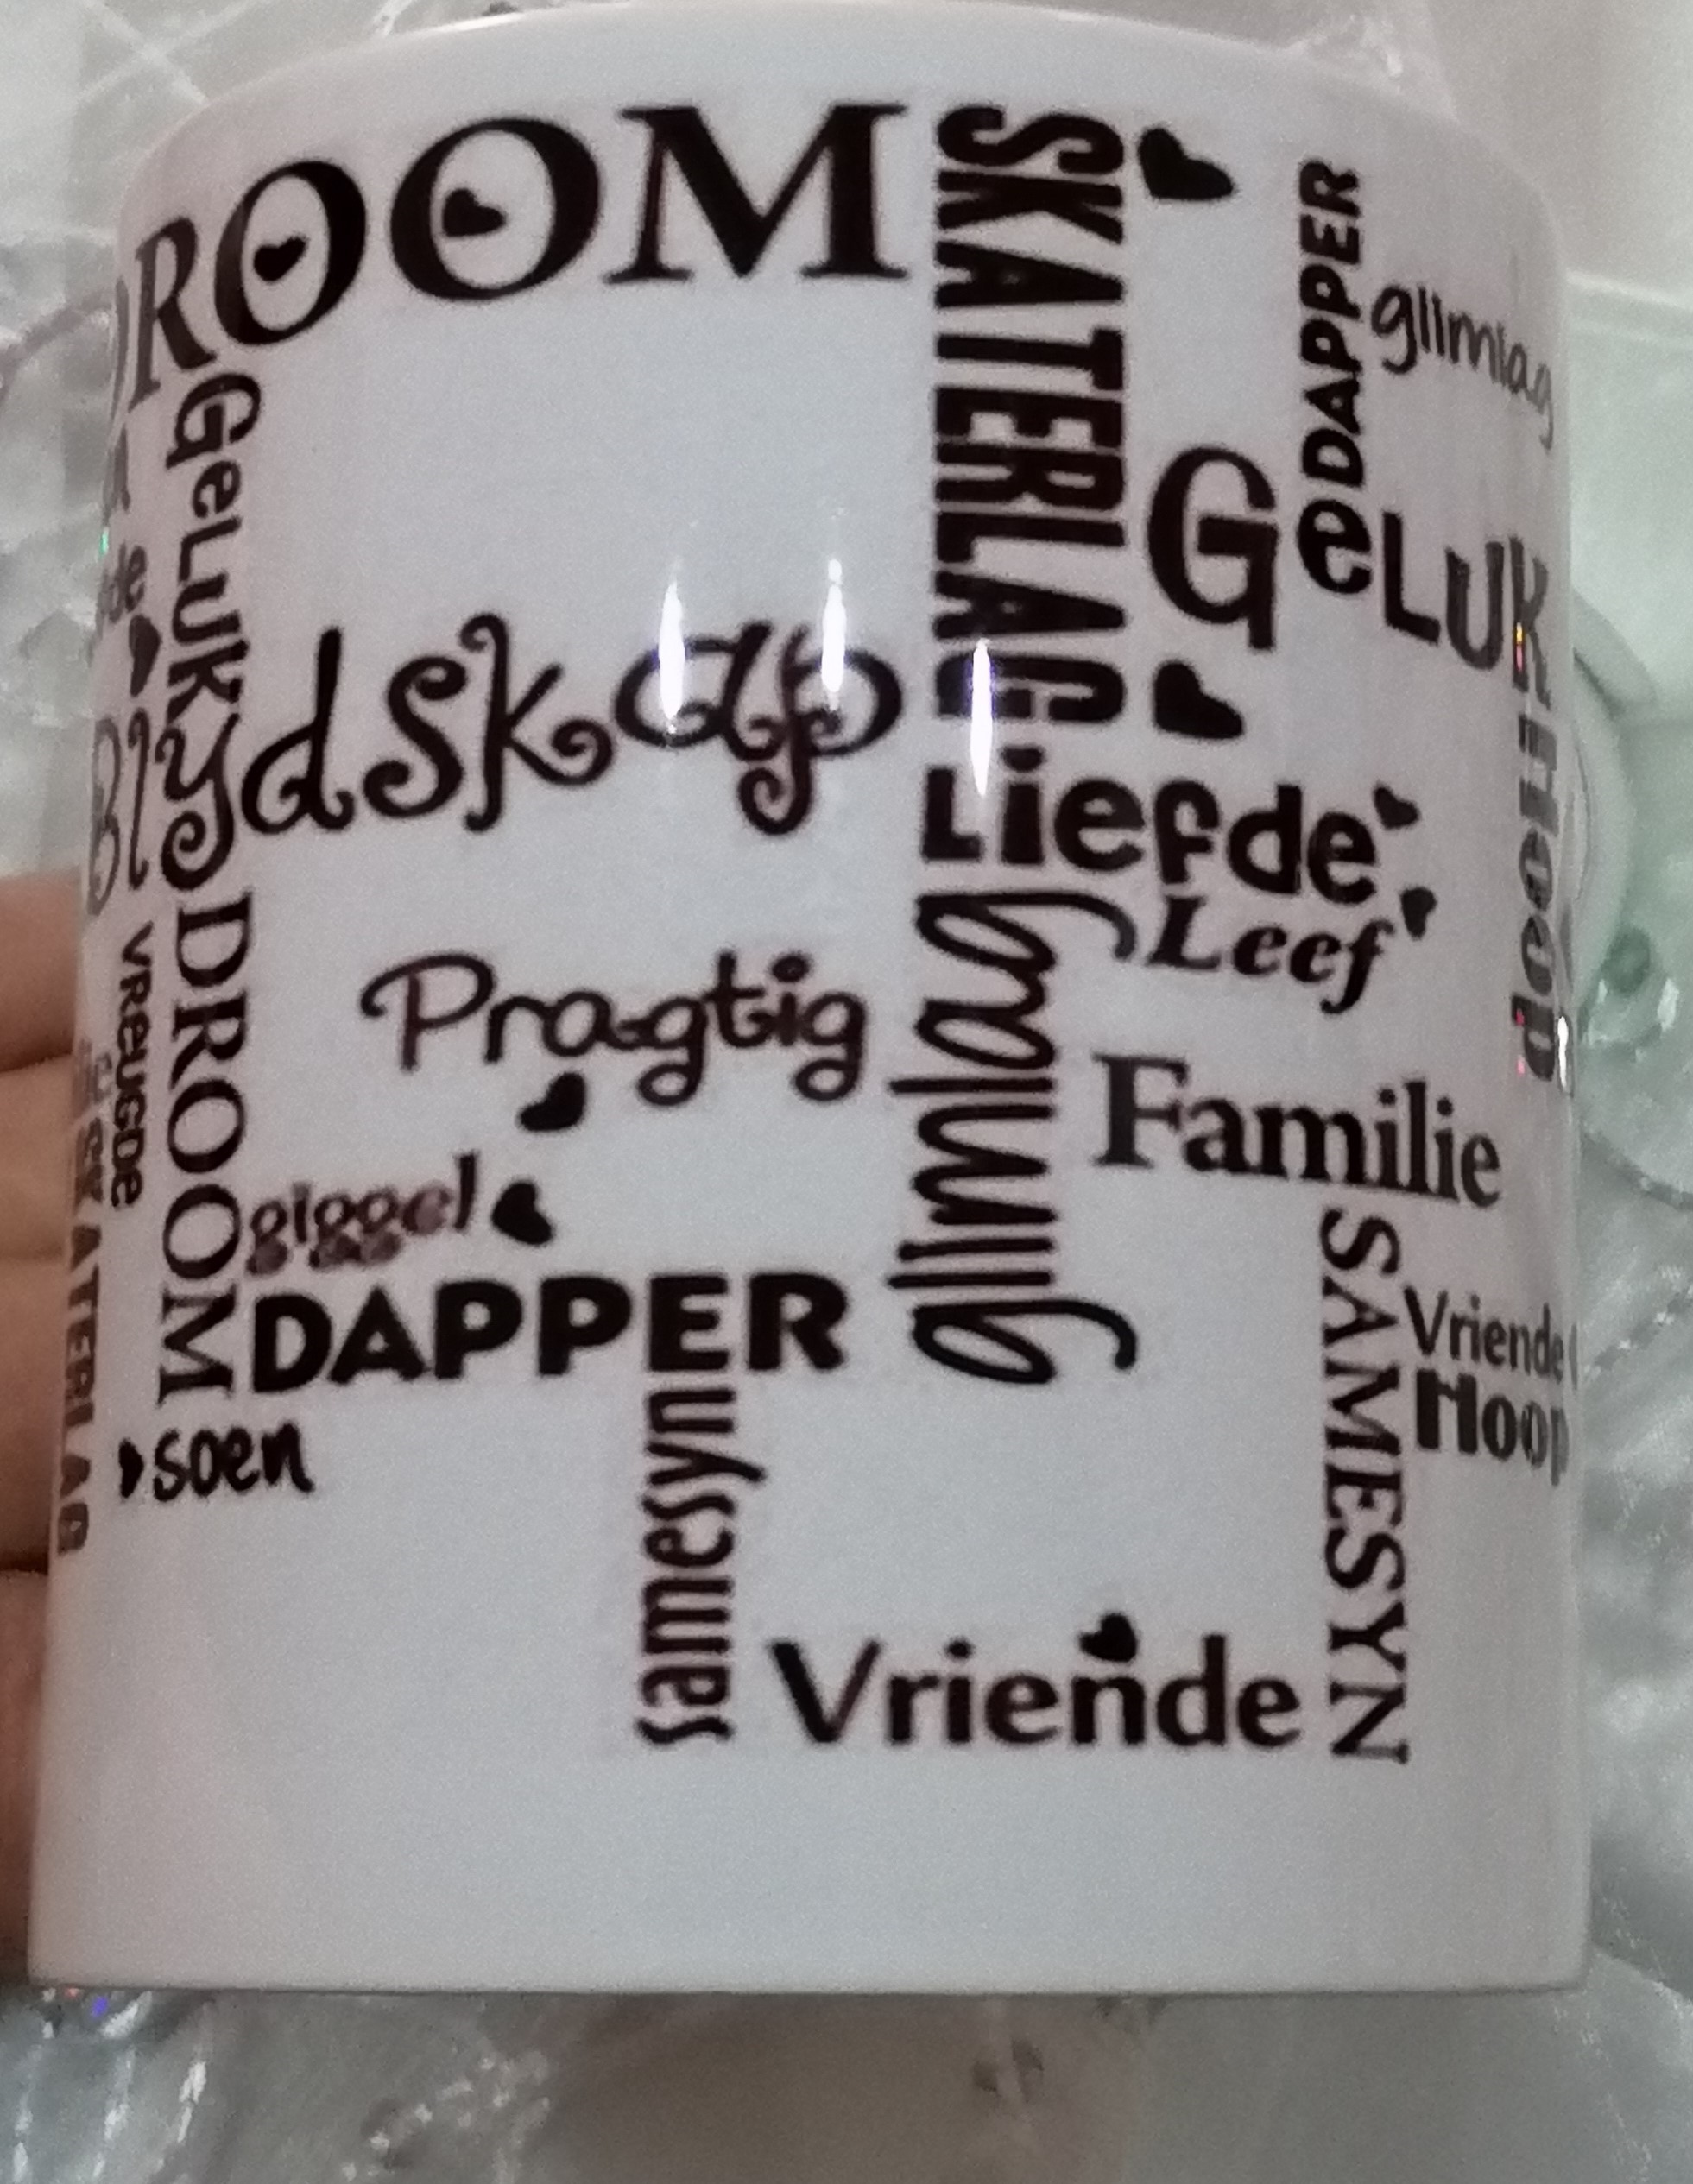 Afrikaans Words on Coffee Mug